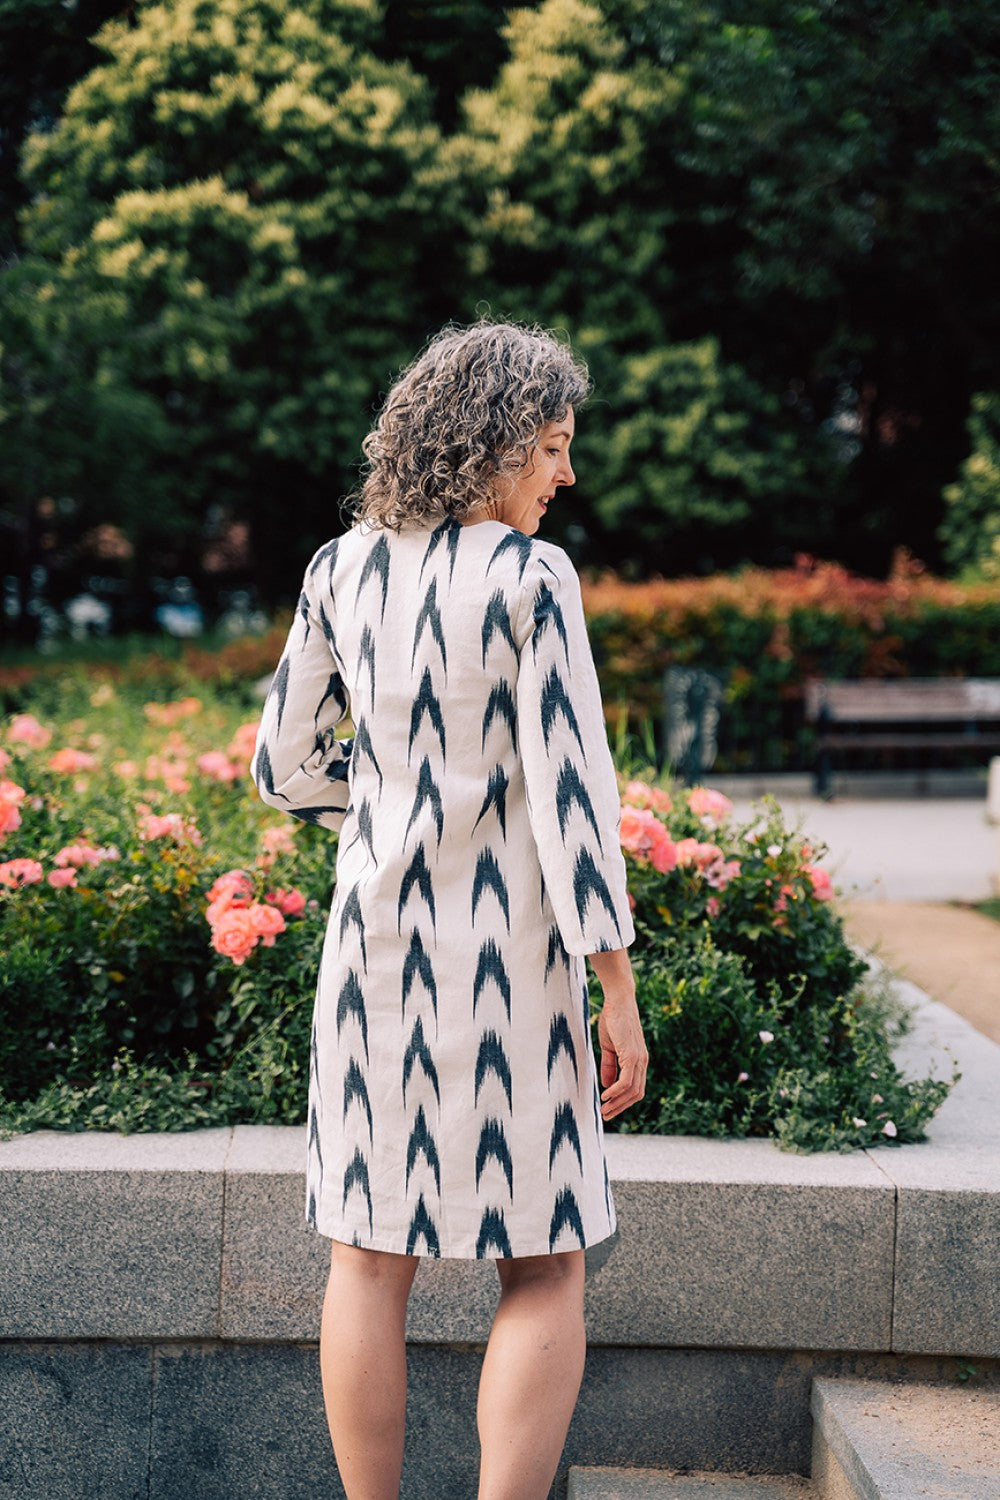 Liesl + Co - Amarena Dress Sewing Pattern